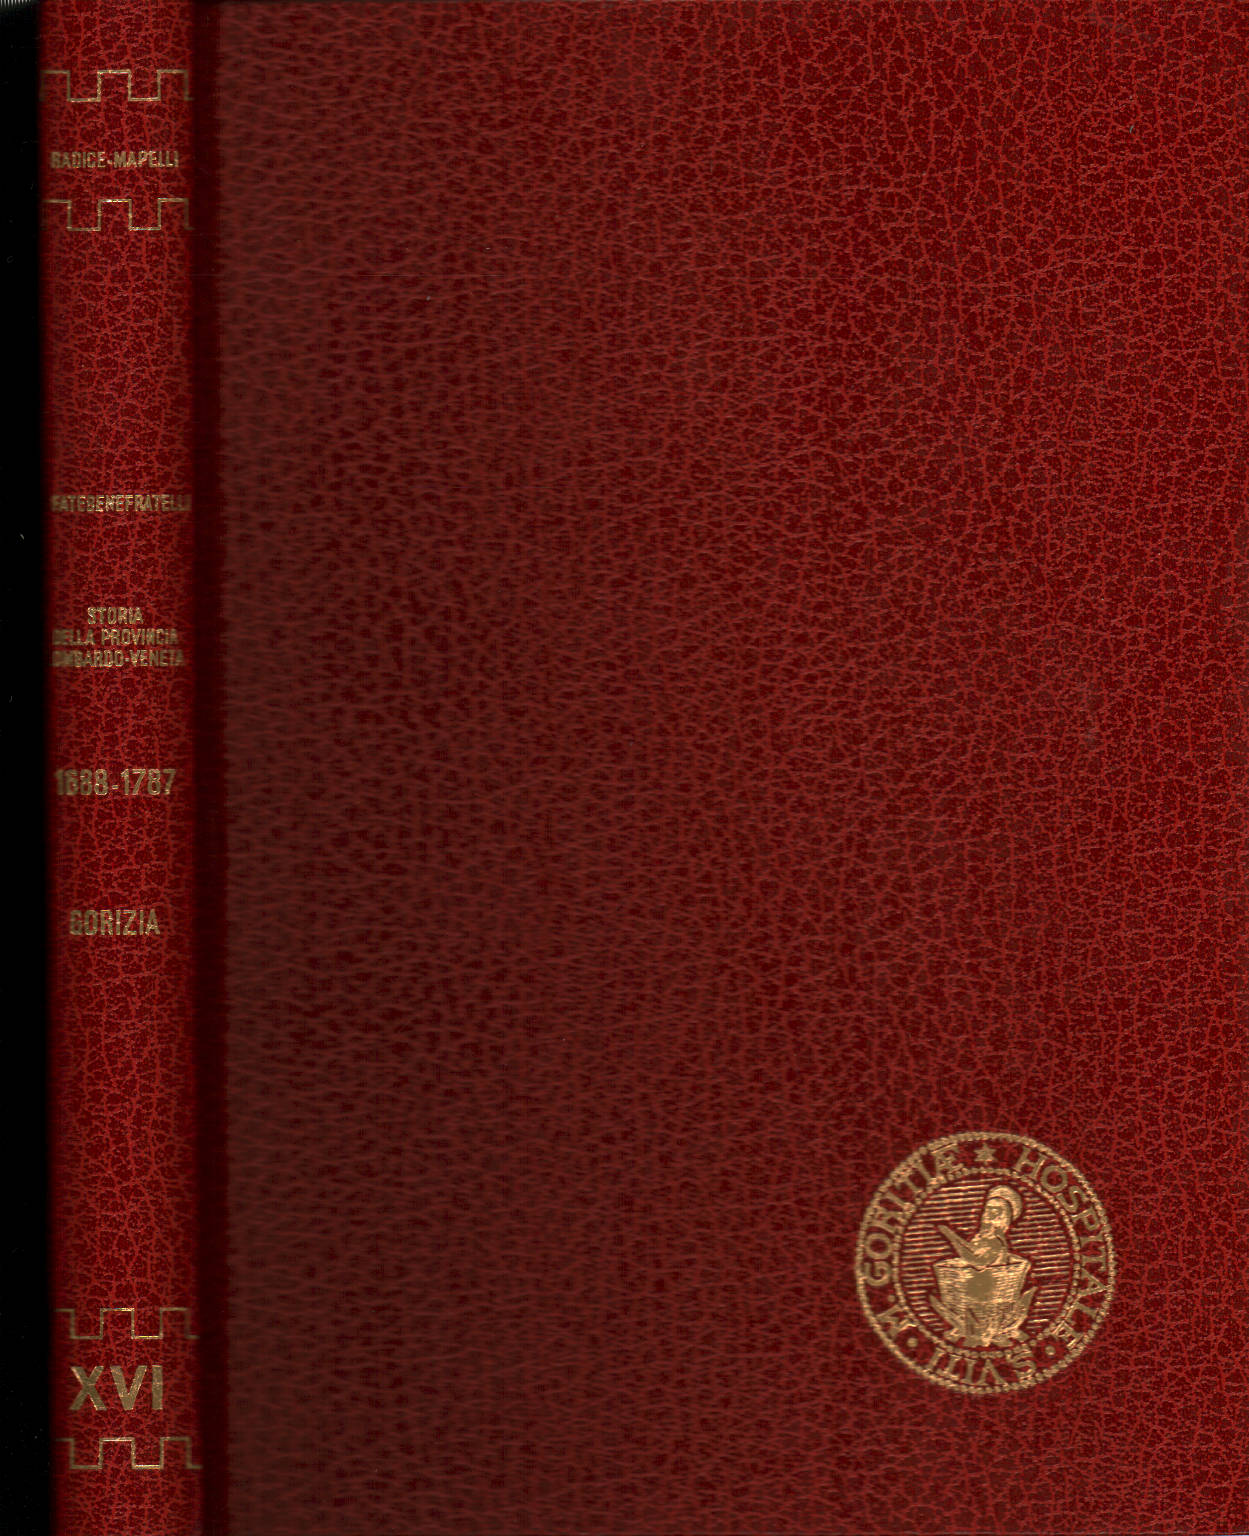 The Fatebenefratelli History of the Province of Lombardy, Gianfranco Radice Celestino Mapelli